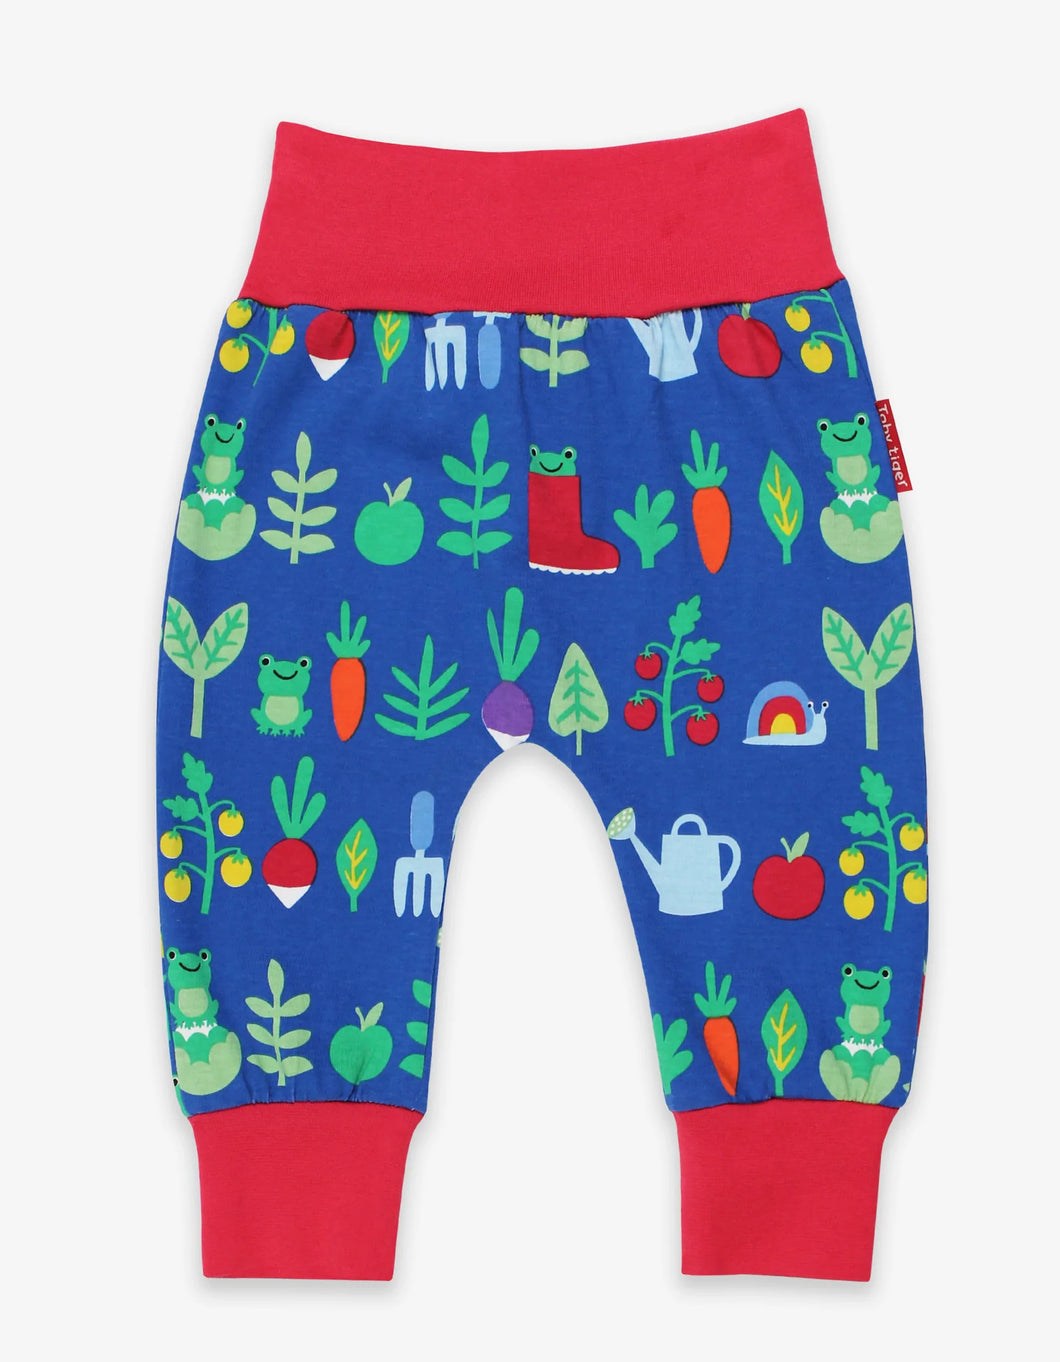 Toby Tiger Organic Vegetable Garden Yoga Pants